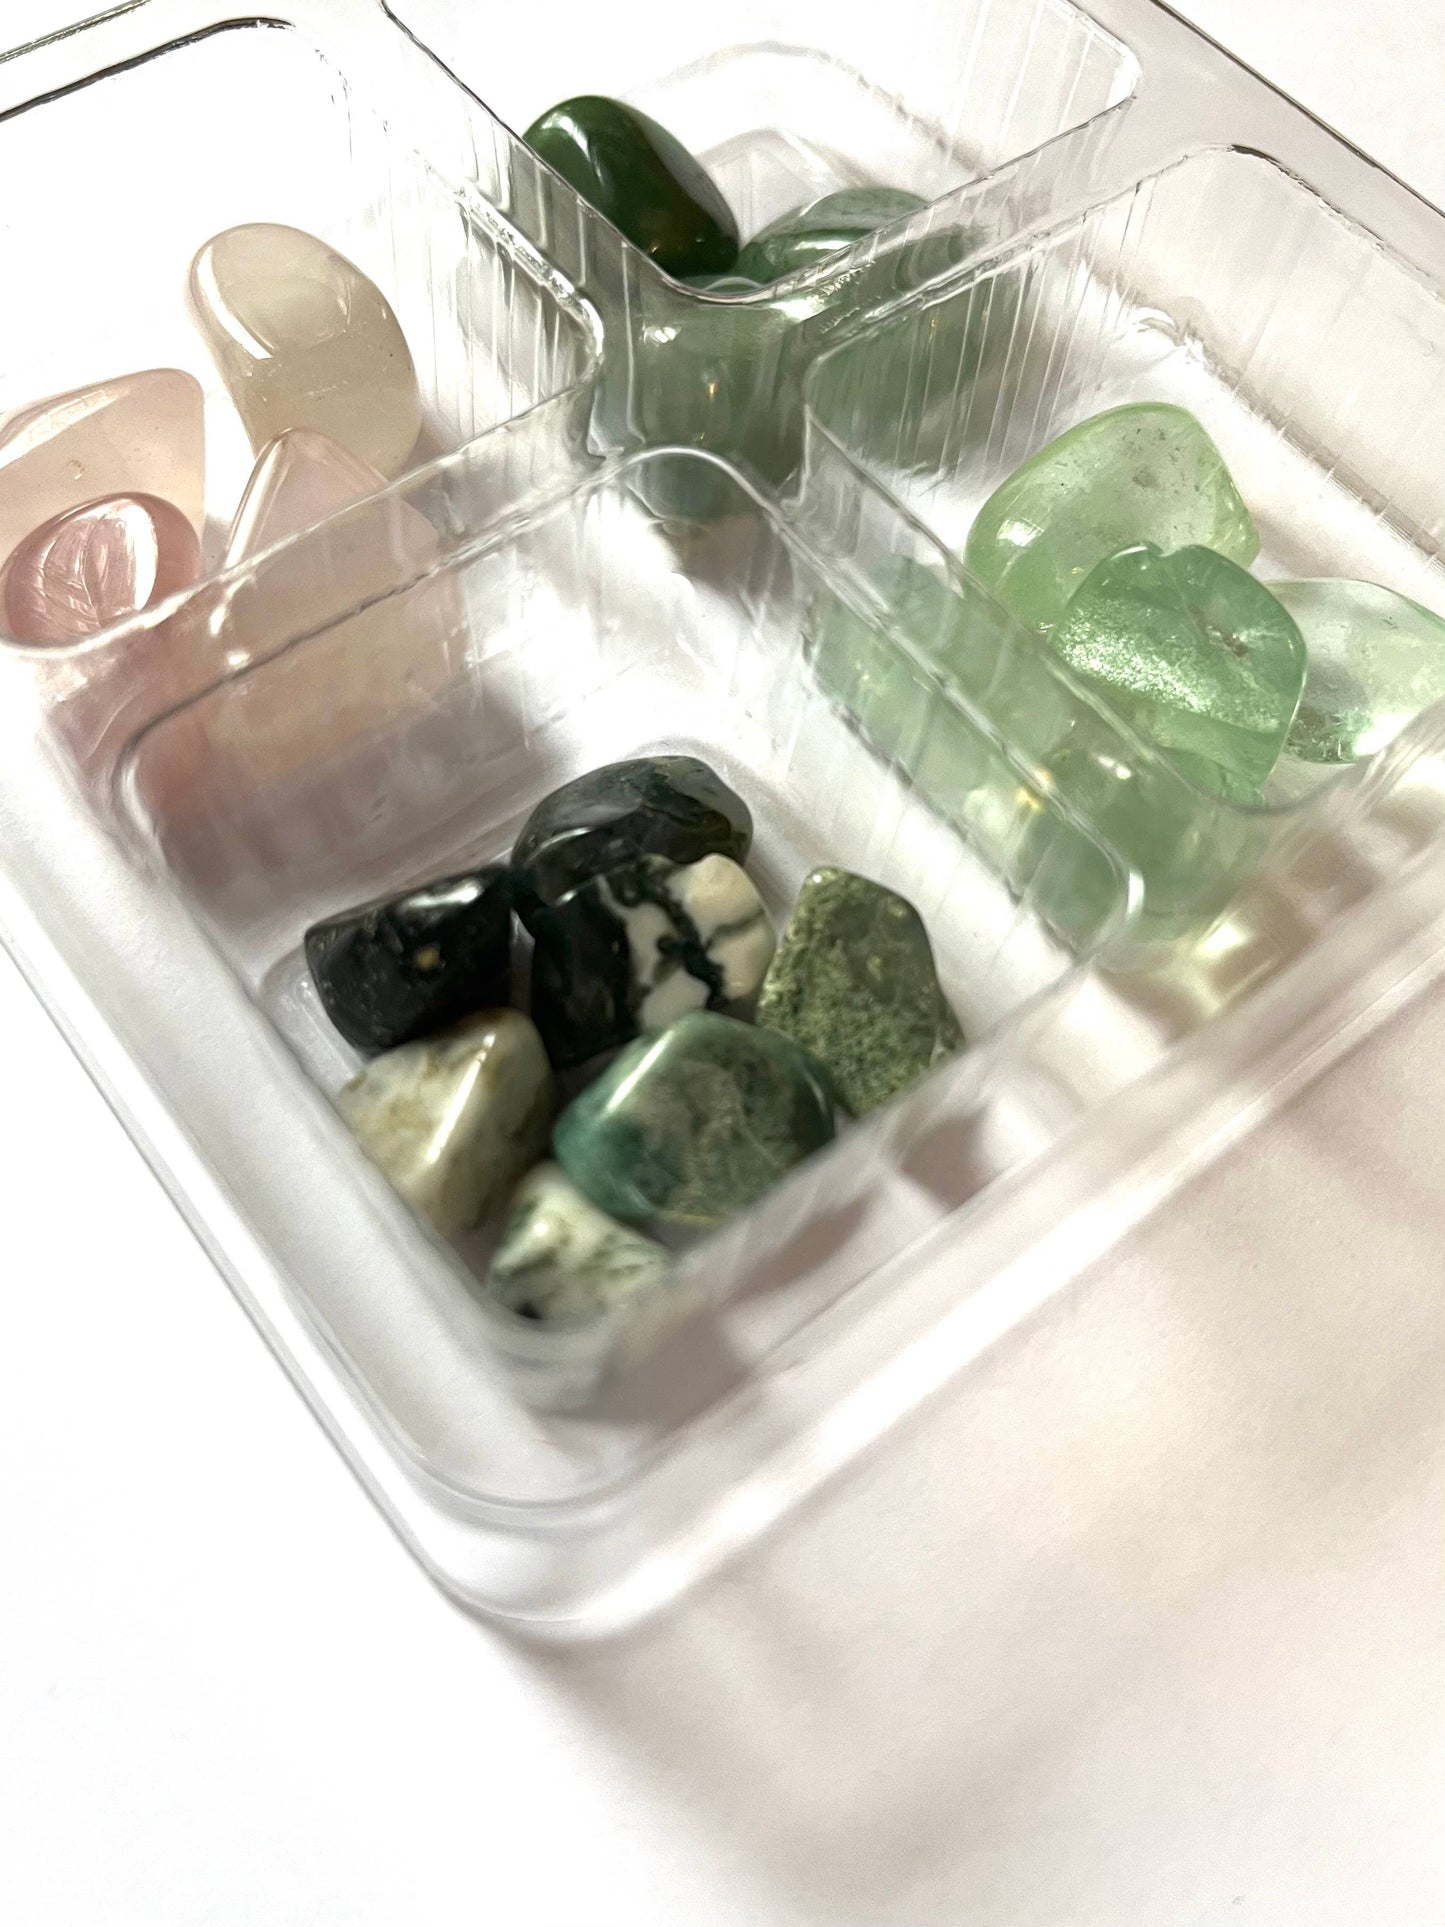 HEART CHAKRA Rox Box - Crystals and Stones gift set